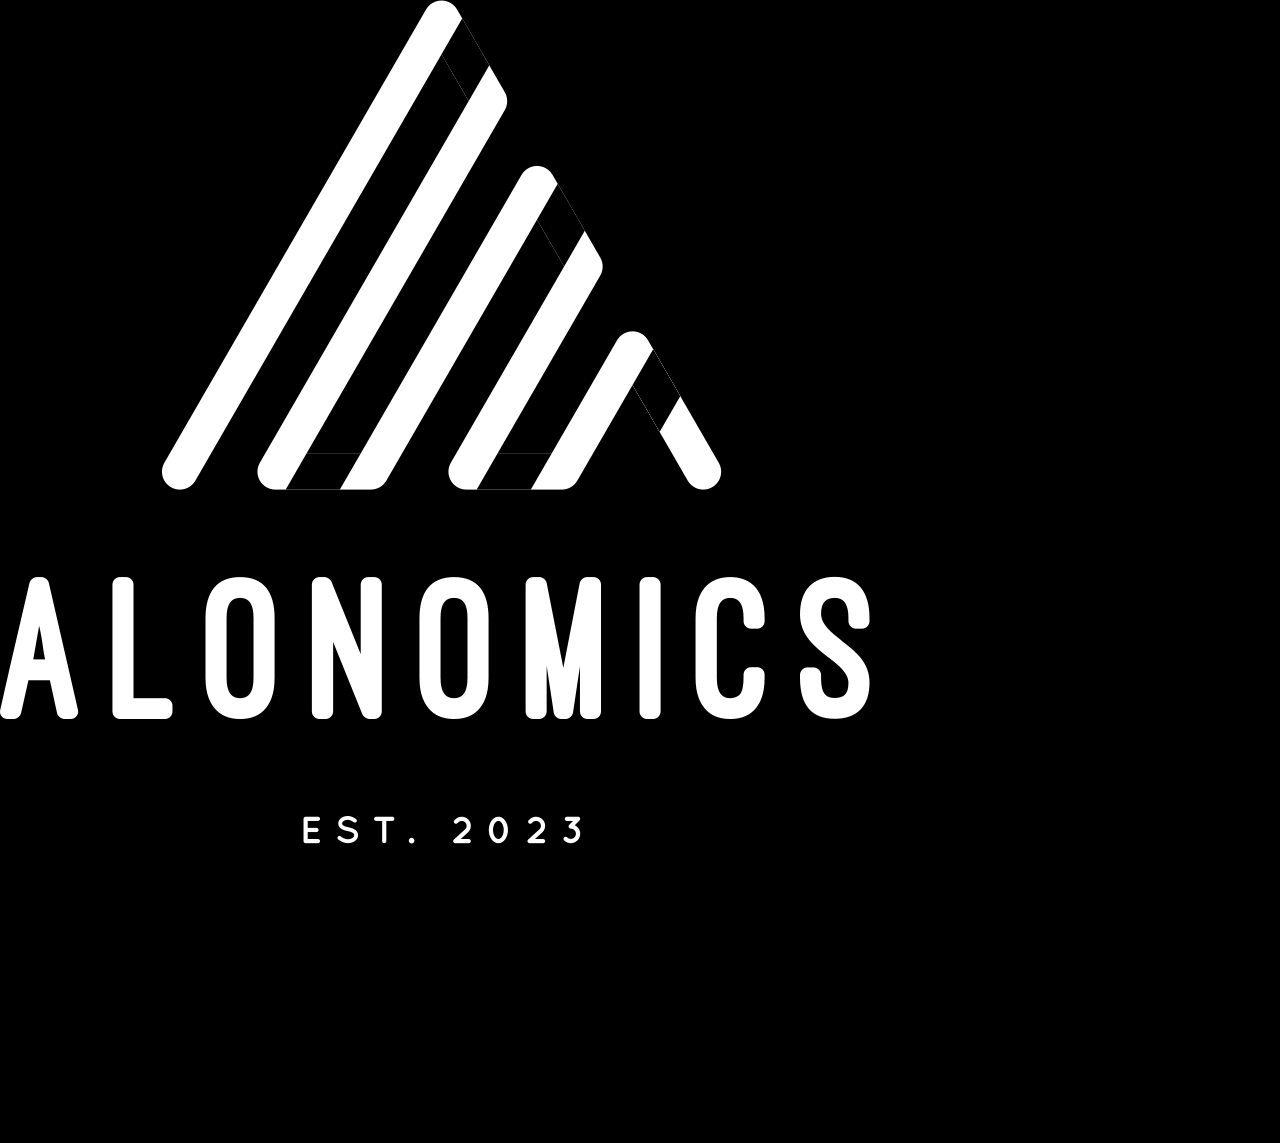 Alonomics's logo